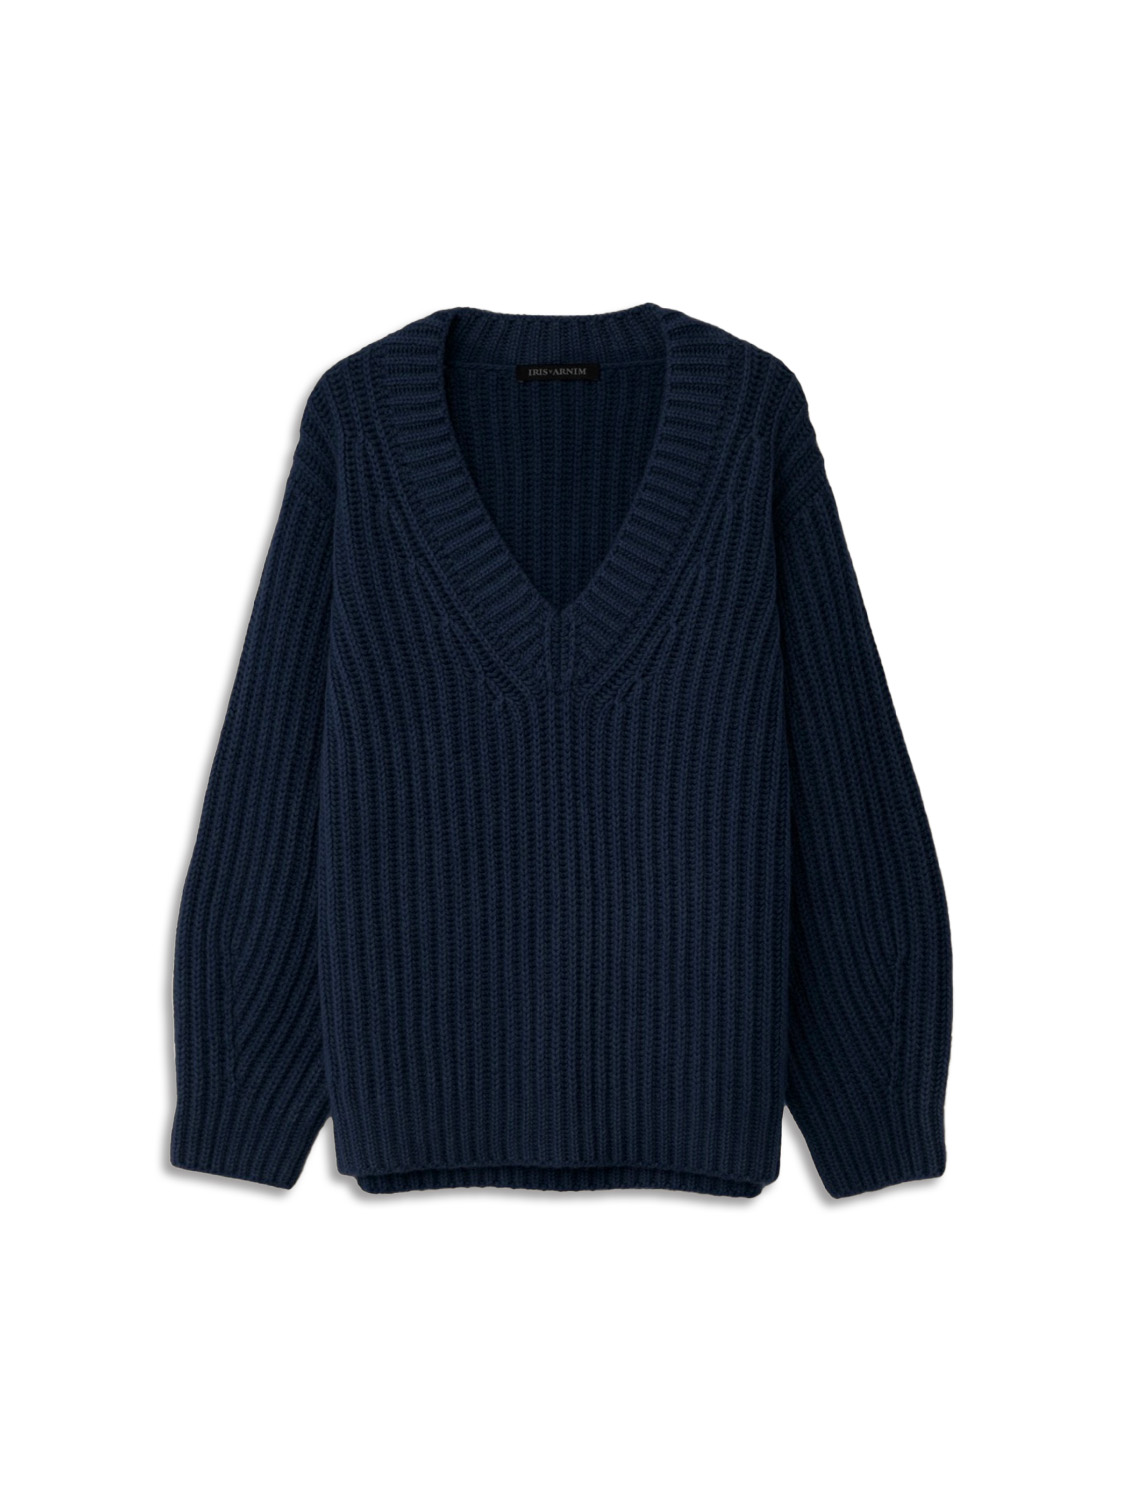 Delaila - Patent knit cashmere sweater